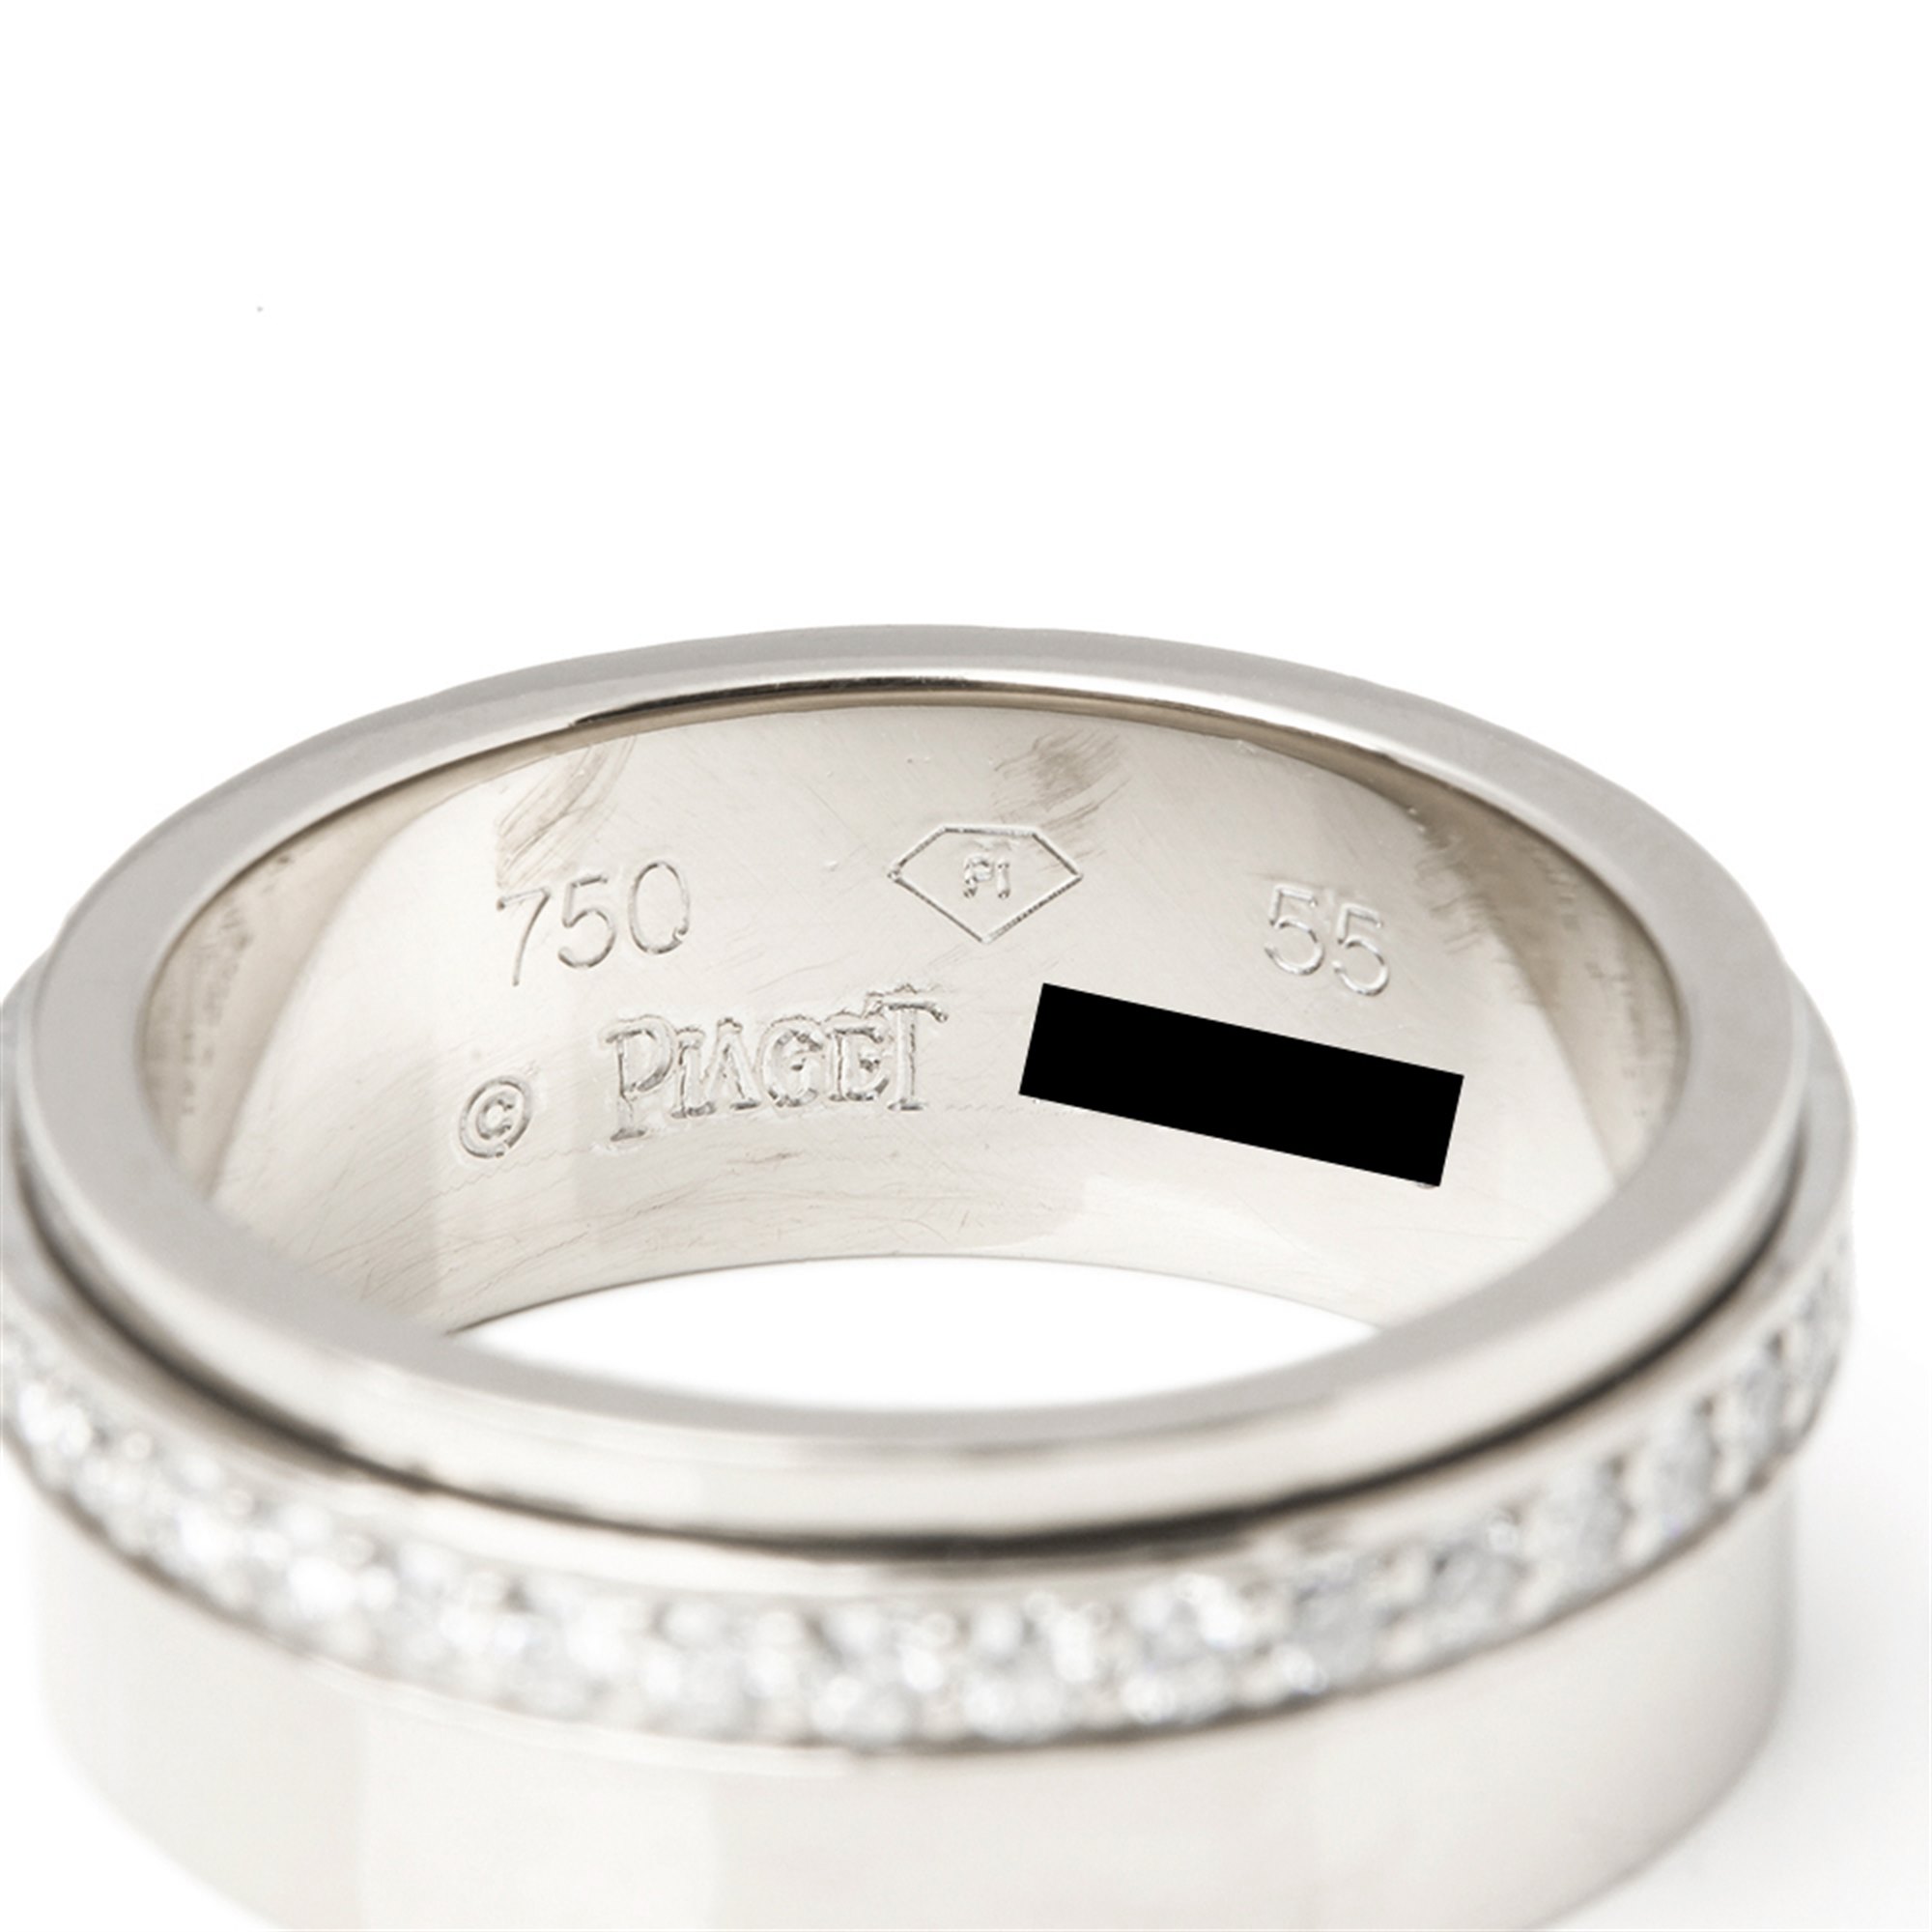 Piaget 18k White Gold Diamond Possession Ring COM1850 Second Hand